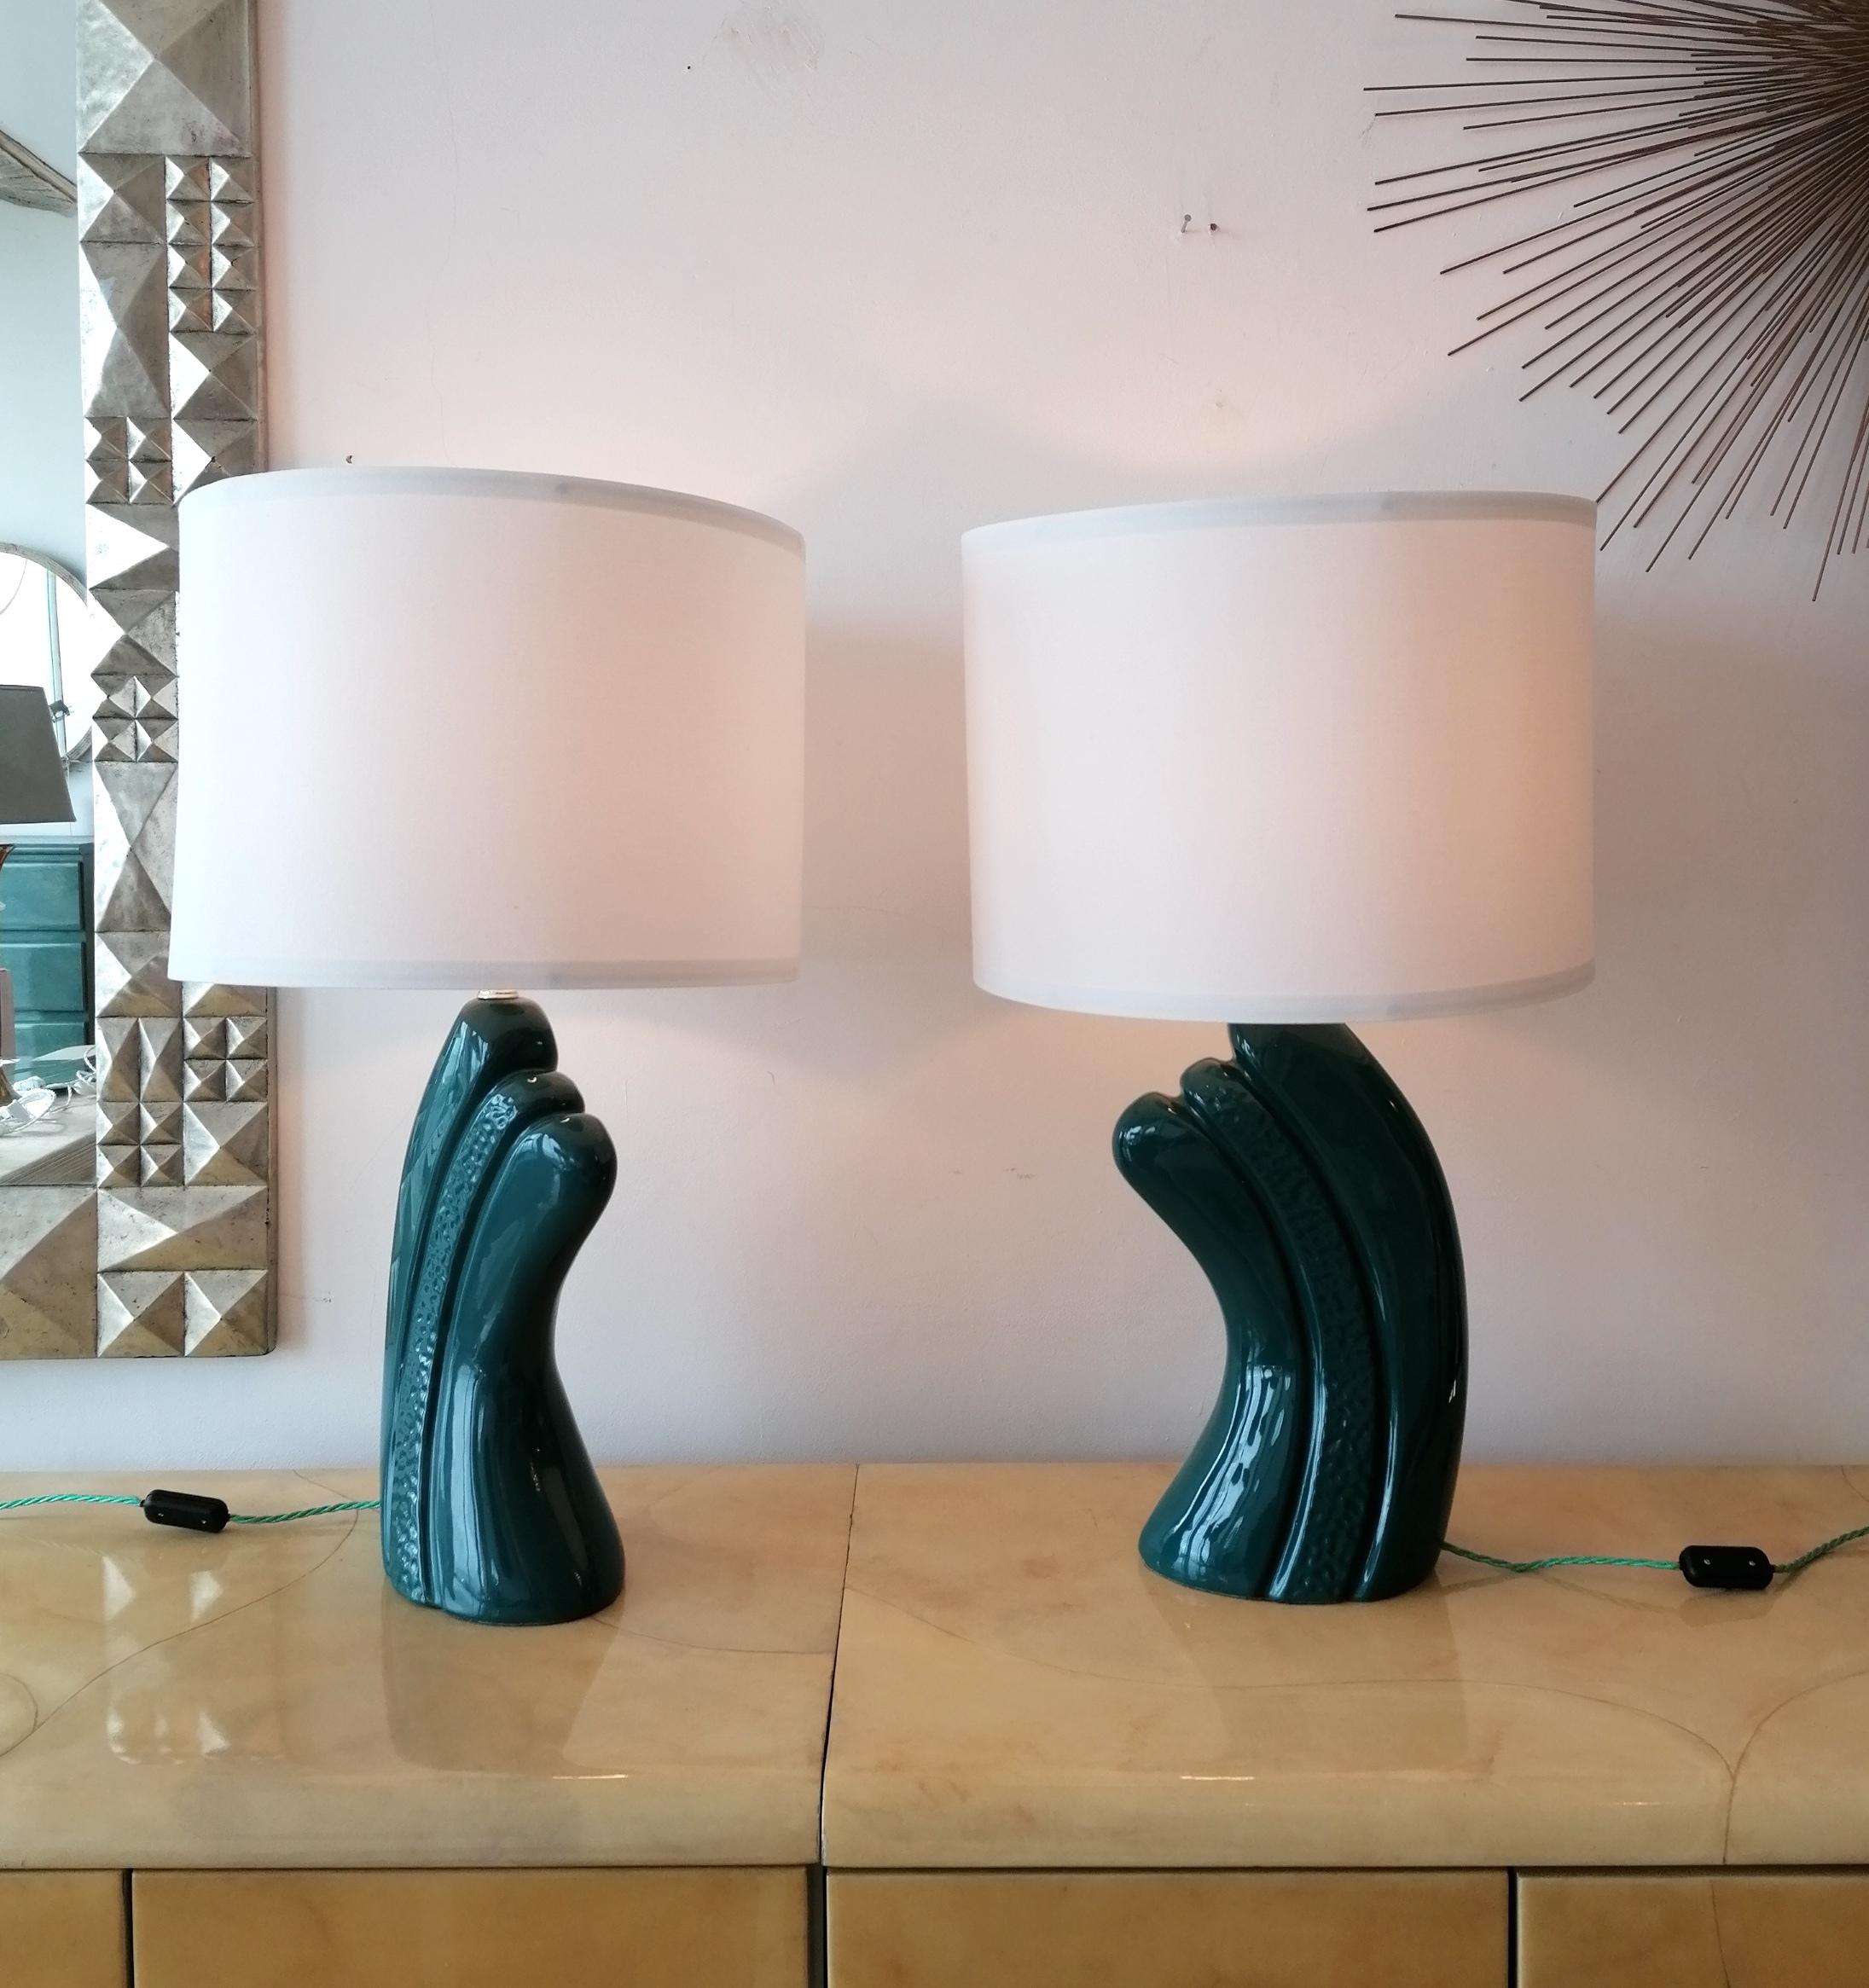 Pair of Dark, Intense Blue / Green Ceramic Lamps, USA 1980s Art Deco Revival For Sale 3